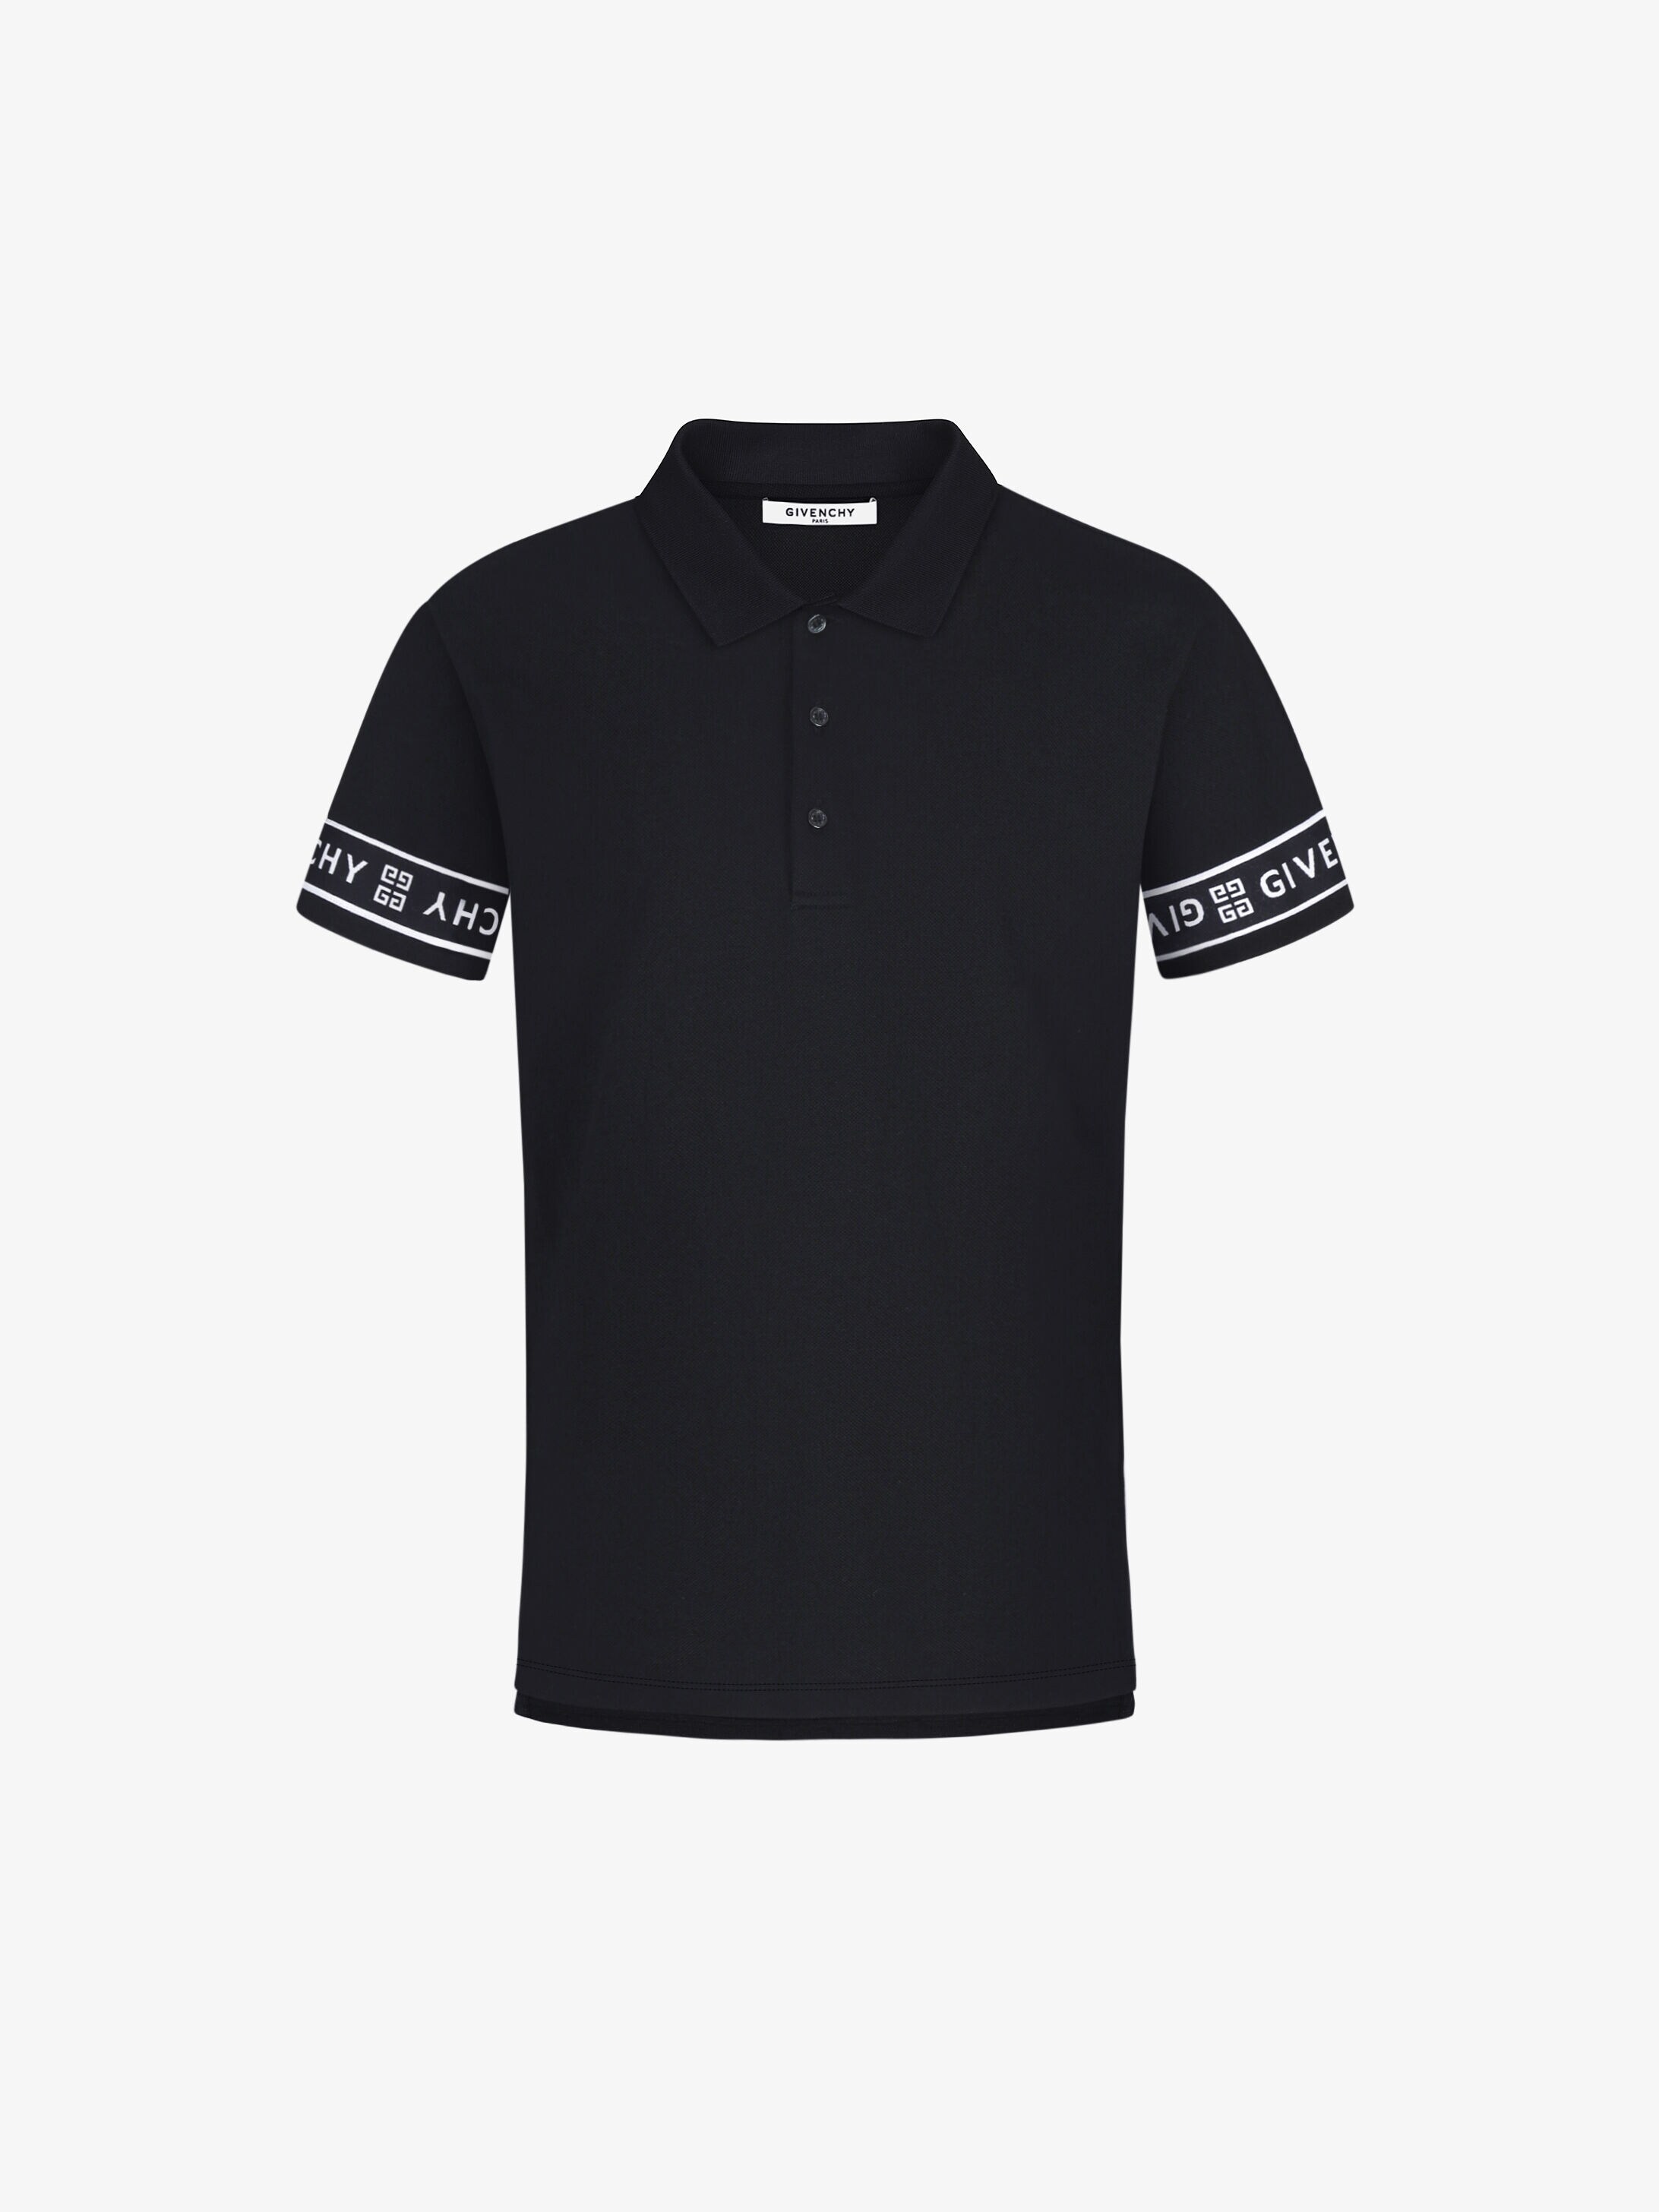 givenchy polo shirt black